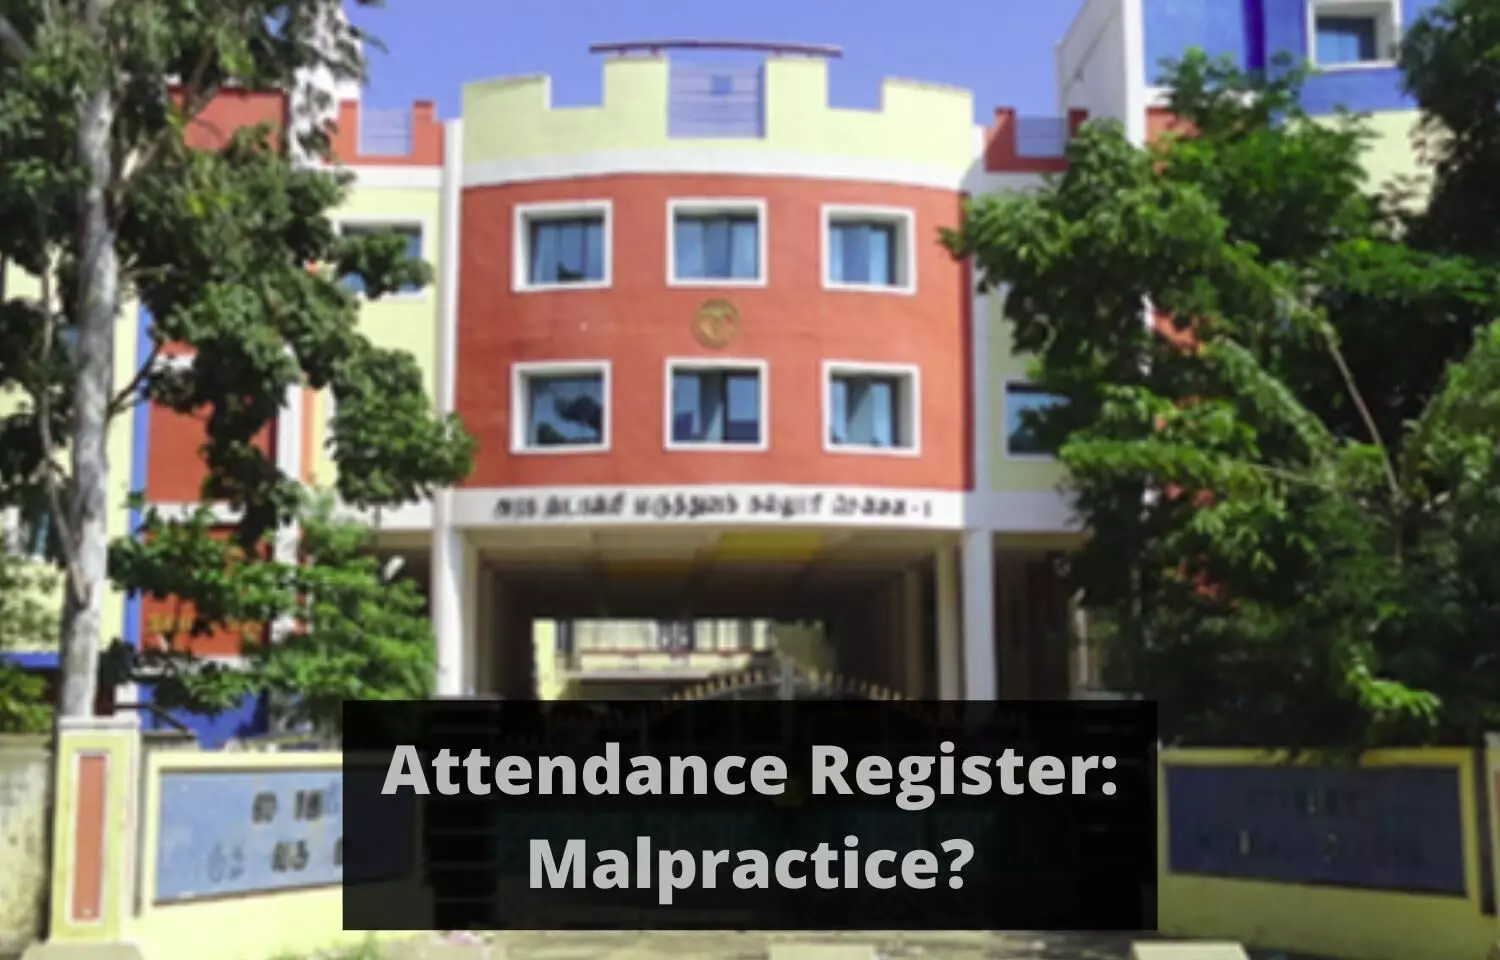 No Malpractice in Attendance Register of Stanley Medical College, reveals probe